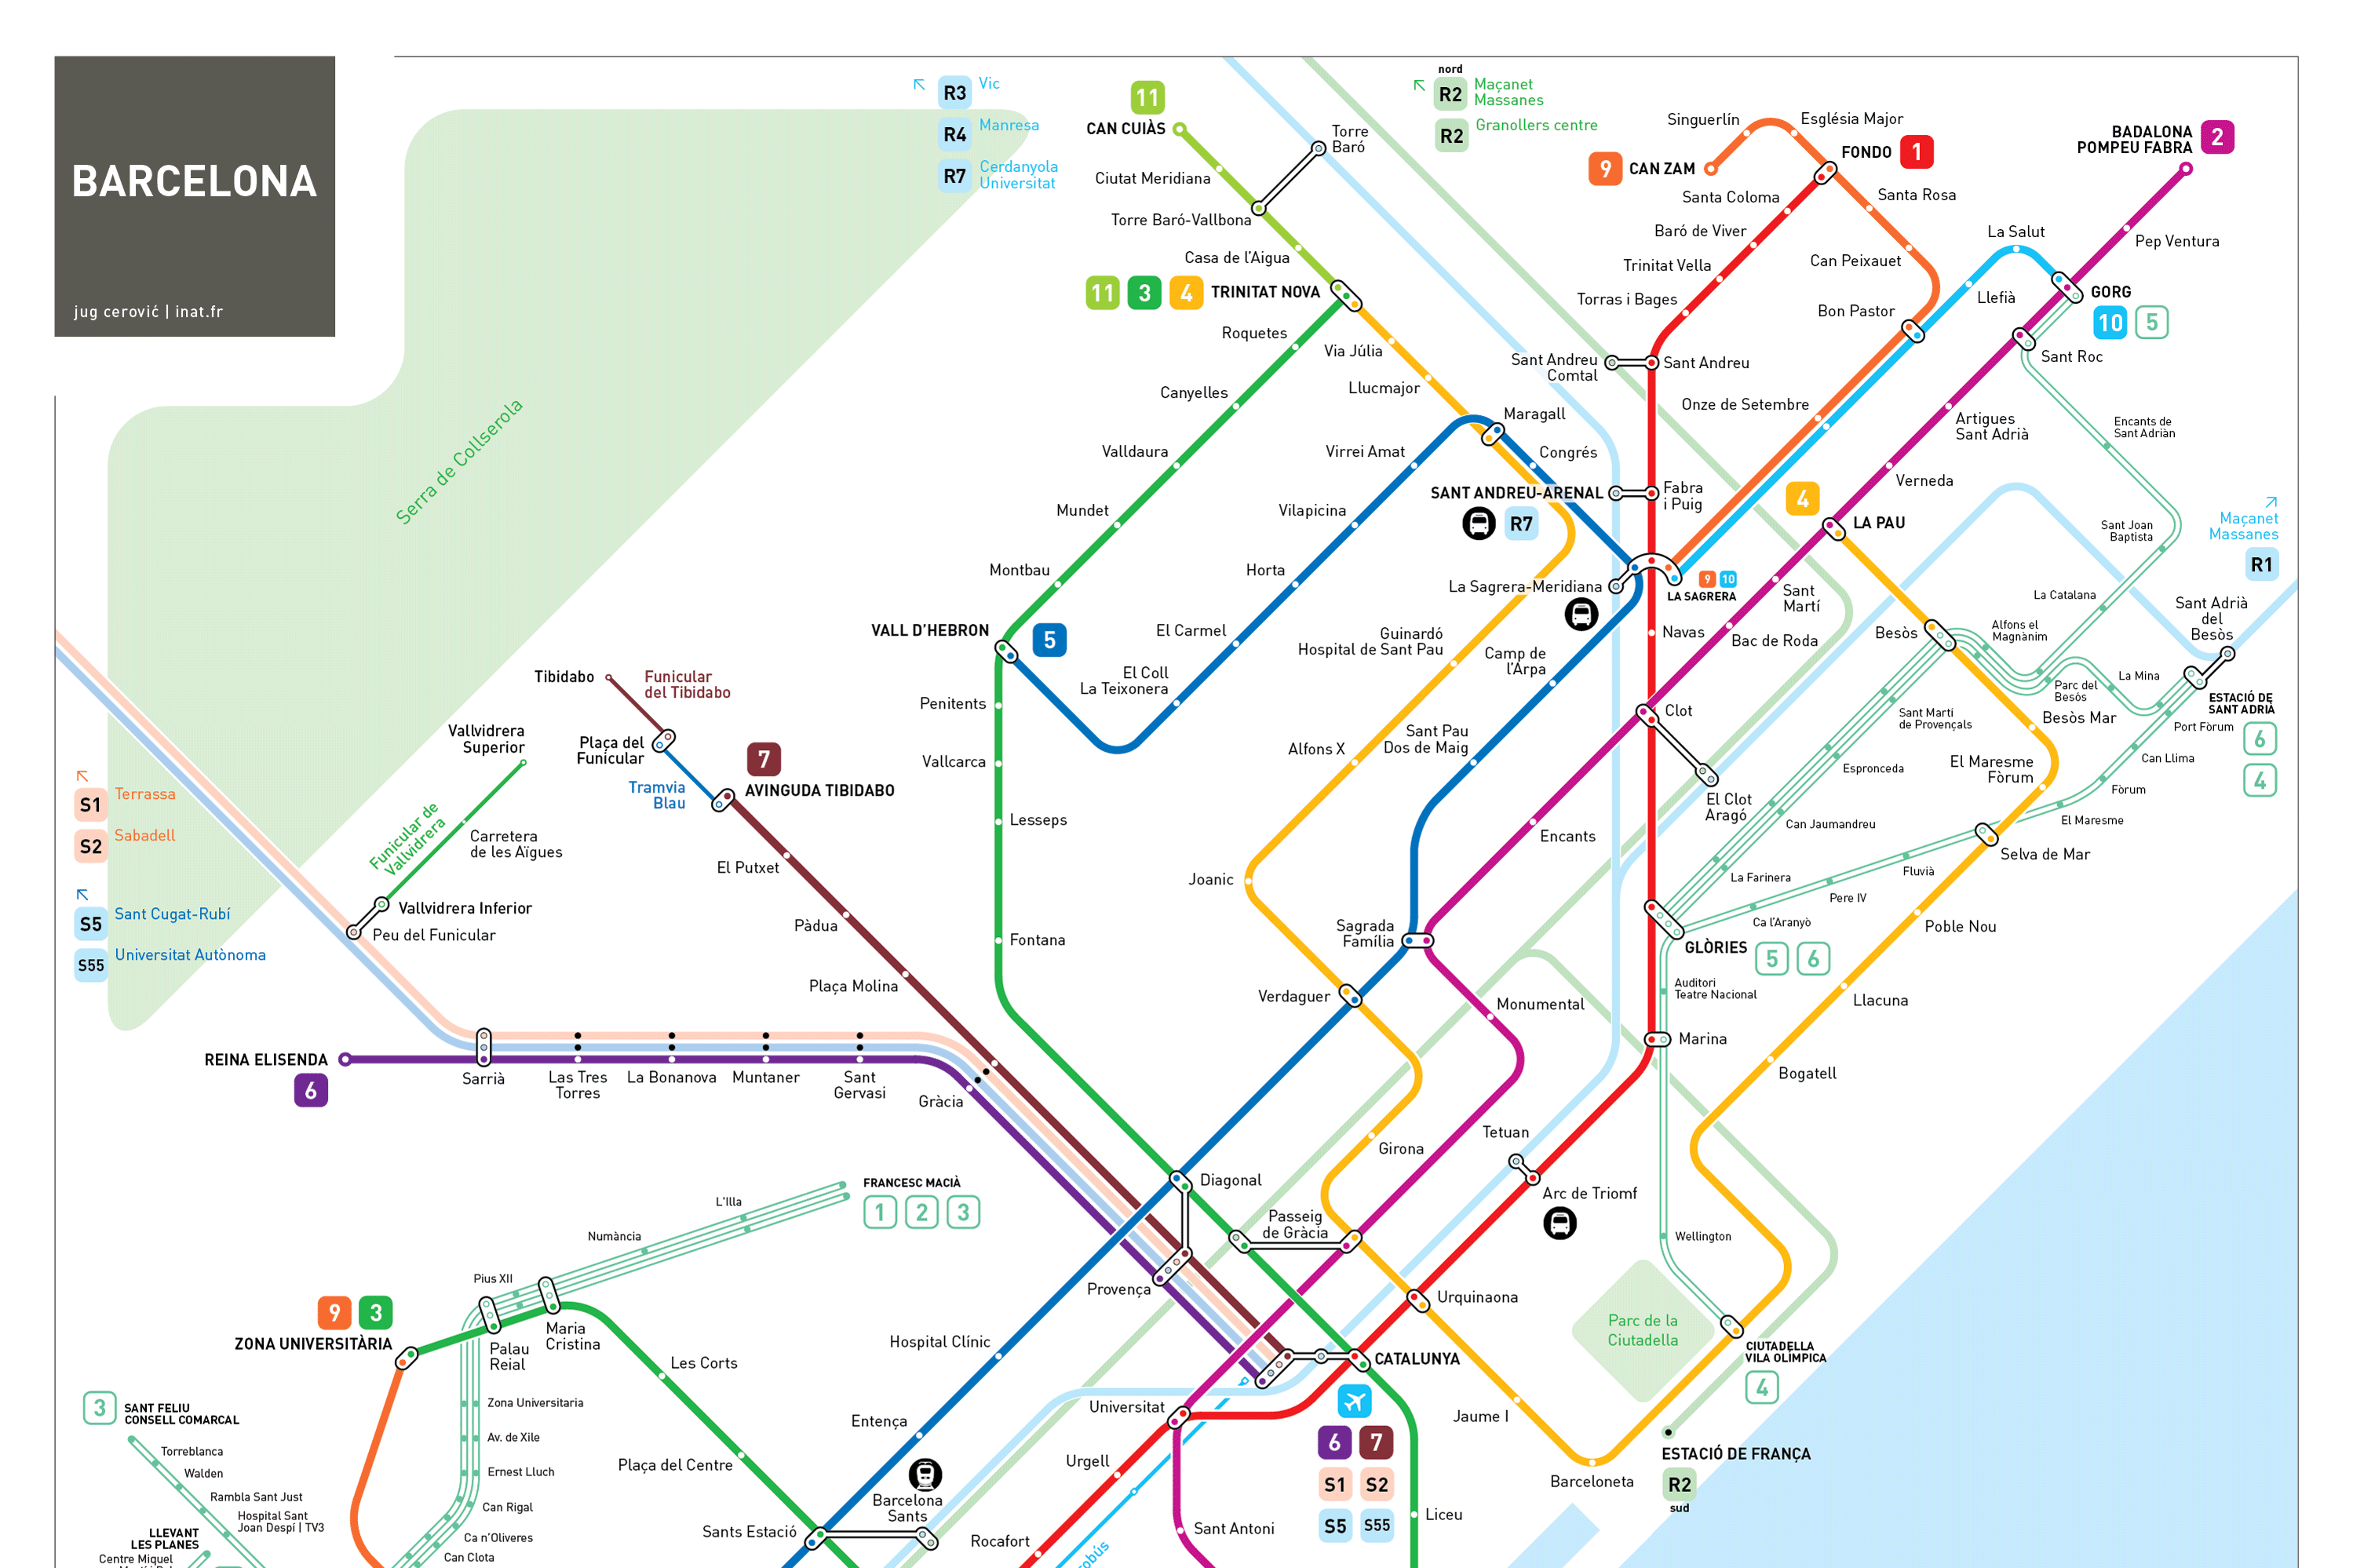 Detall del plànol del metro de Barcelona de Jug Cerovic